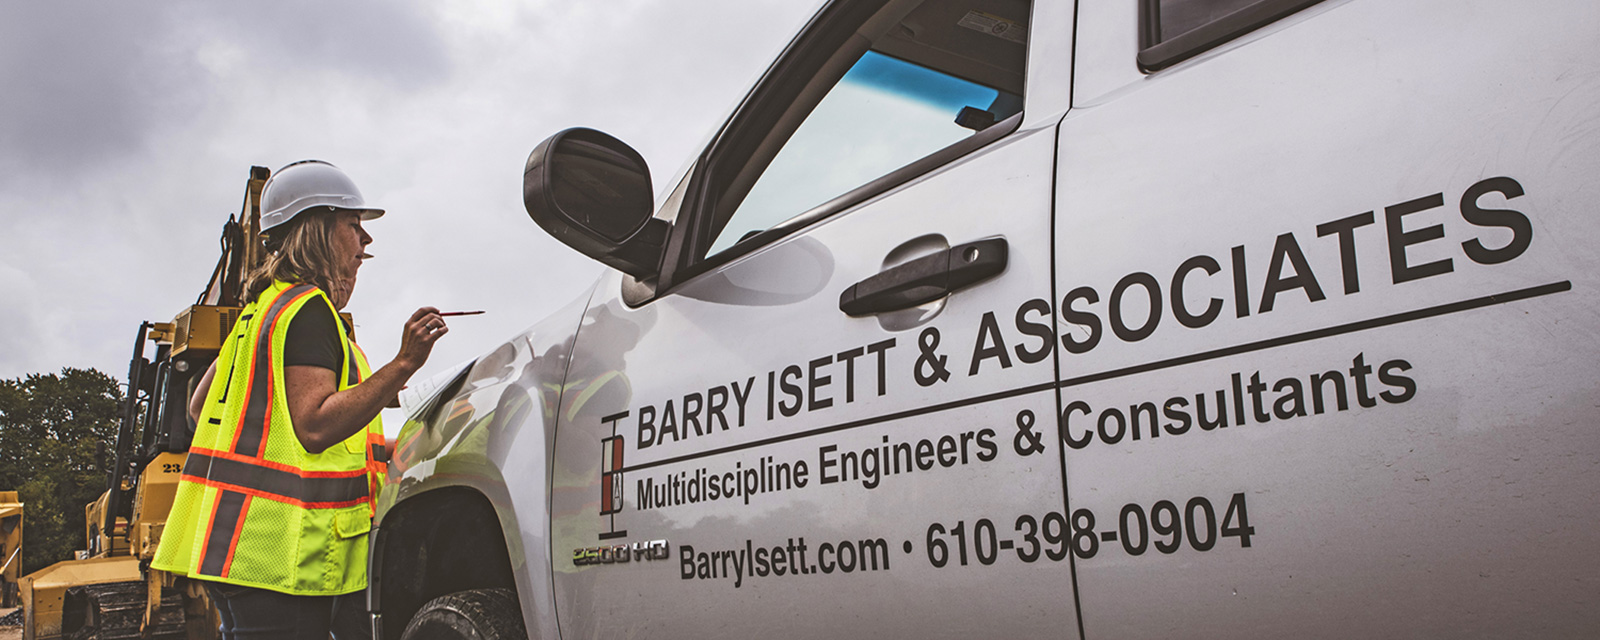 Barry Isett & Associates Multidiscipline Engineers & Consultants Truck